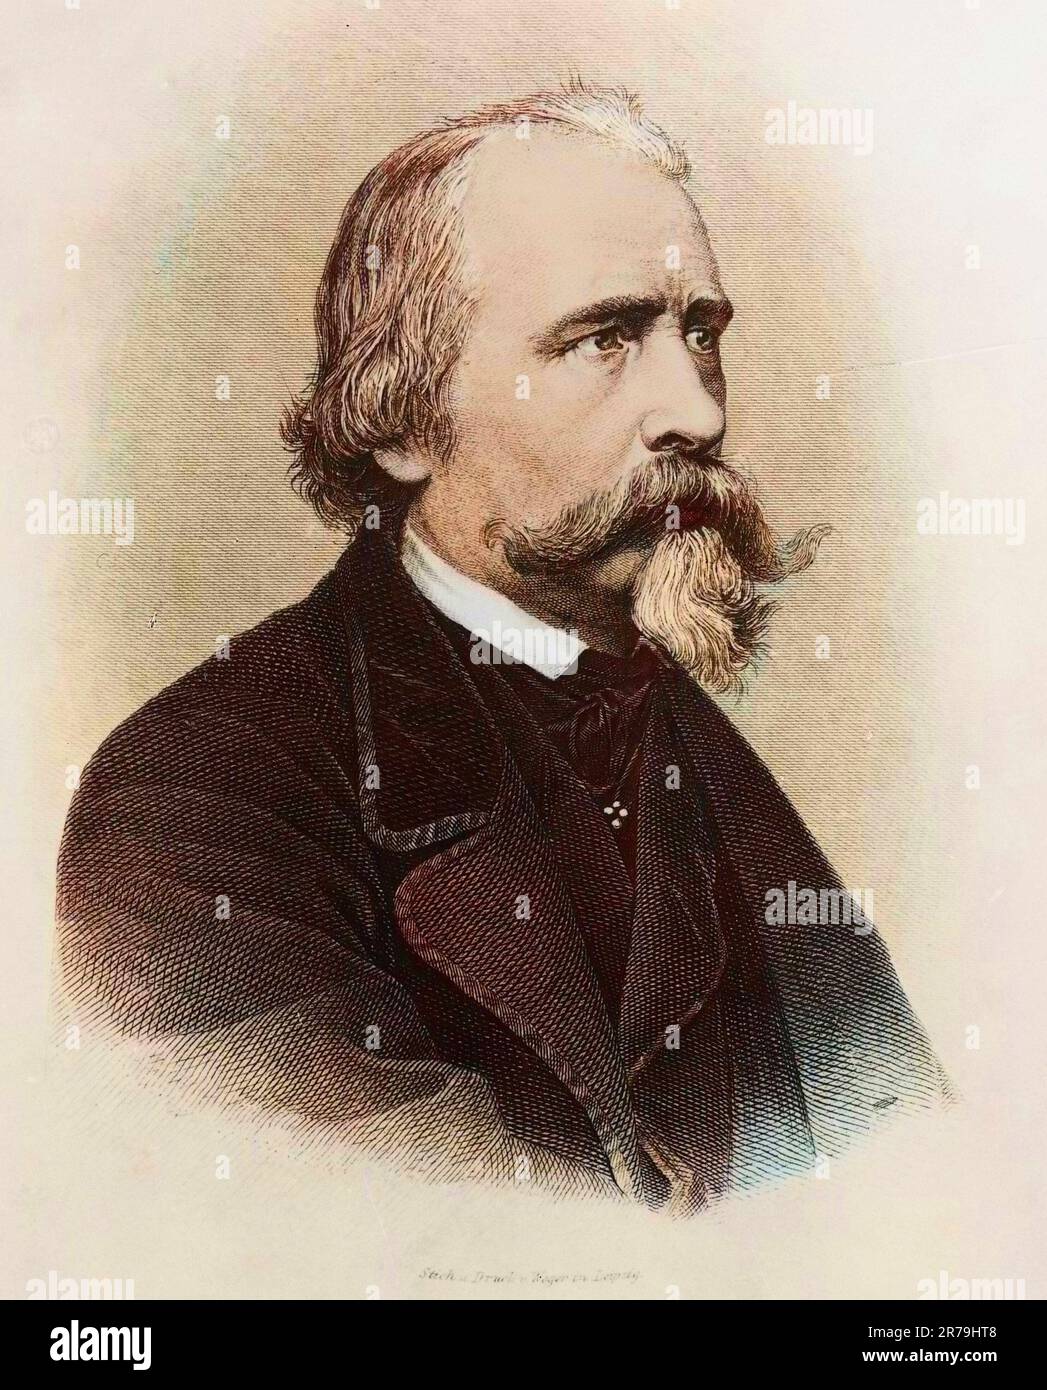 Portrait of Emanuel von Geibel (1815-1884), German poet, engraving - Portrait de Emanuel von Geibel (1815-1884) poete et dramaturge allemand. Stock Photo